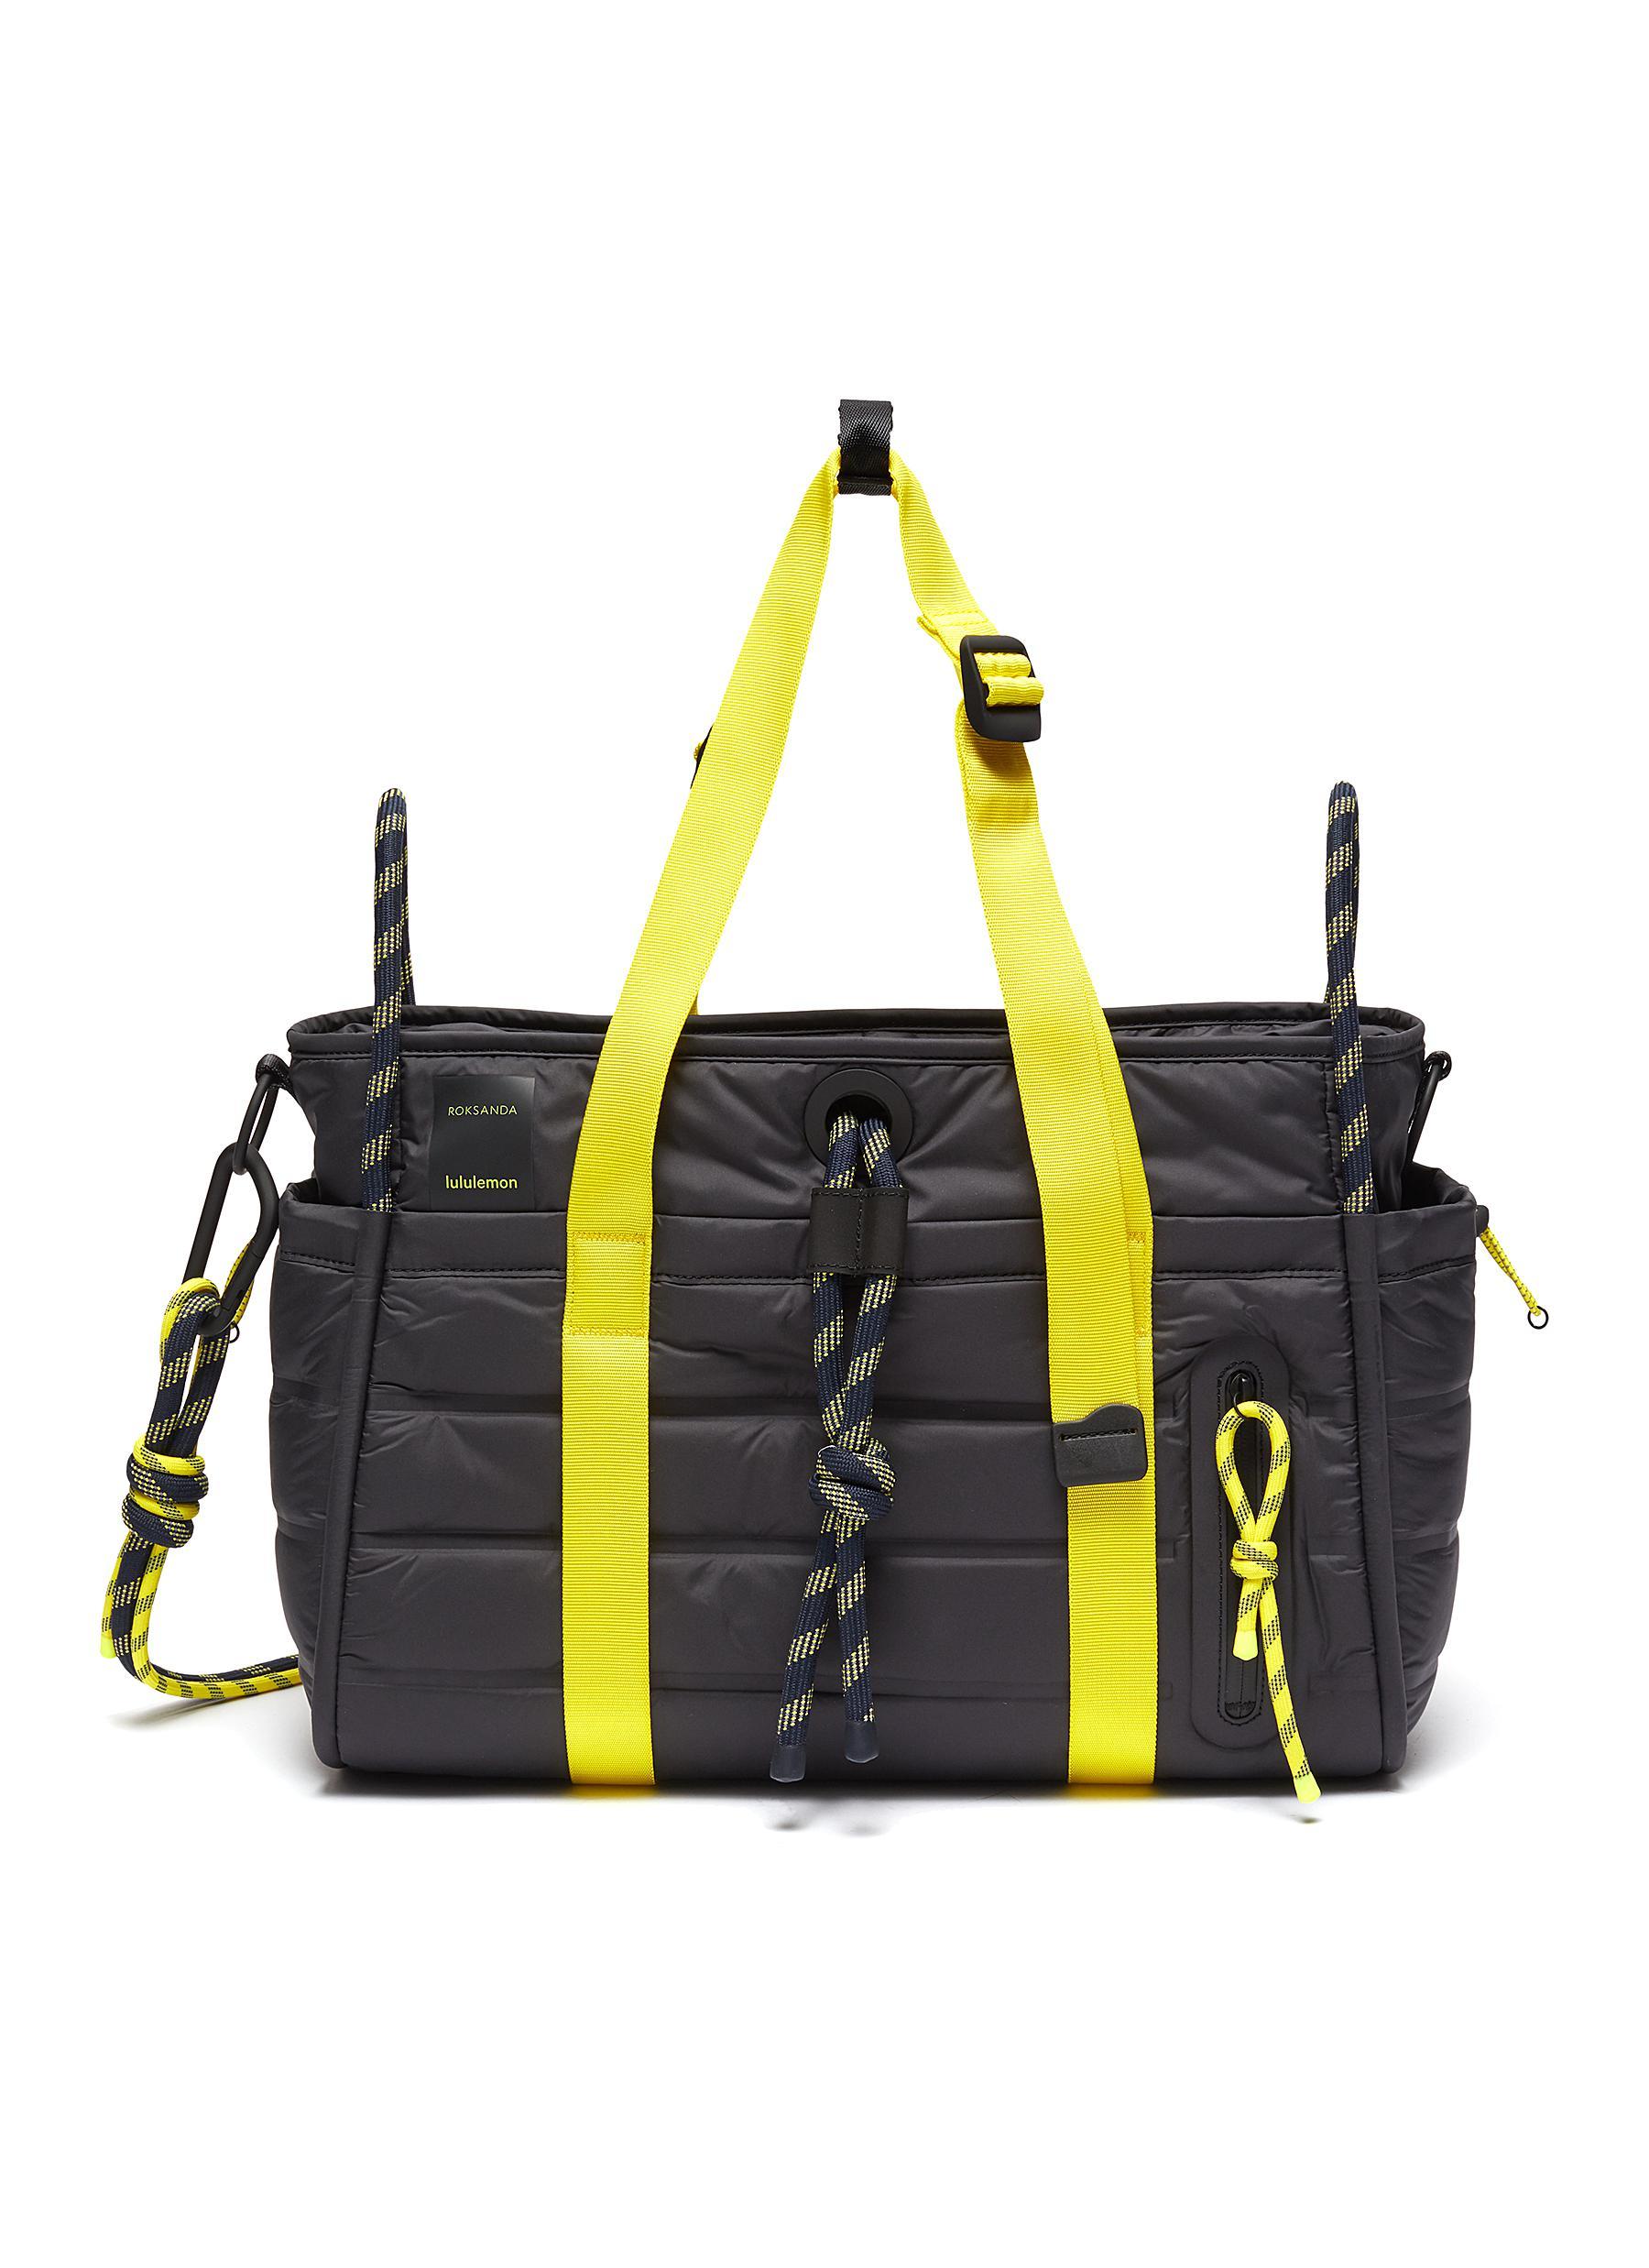 ROKSANDA X Lululemon Colour-block Duffle Bag in Black | Lyst